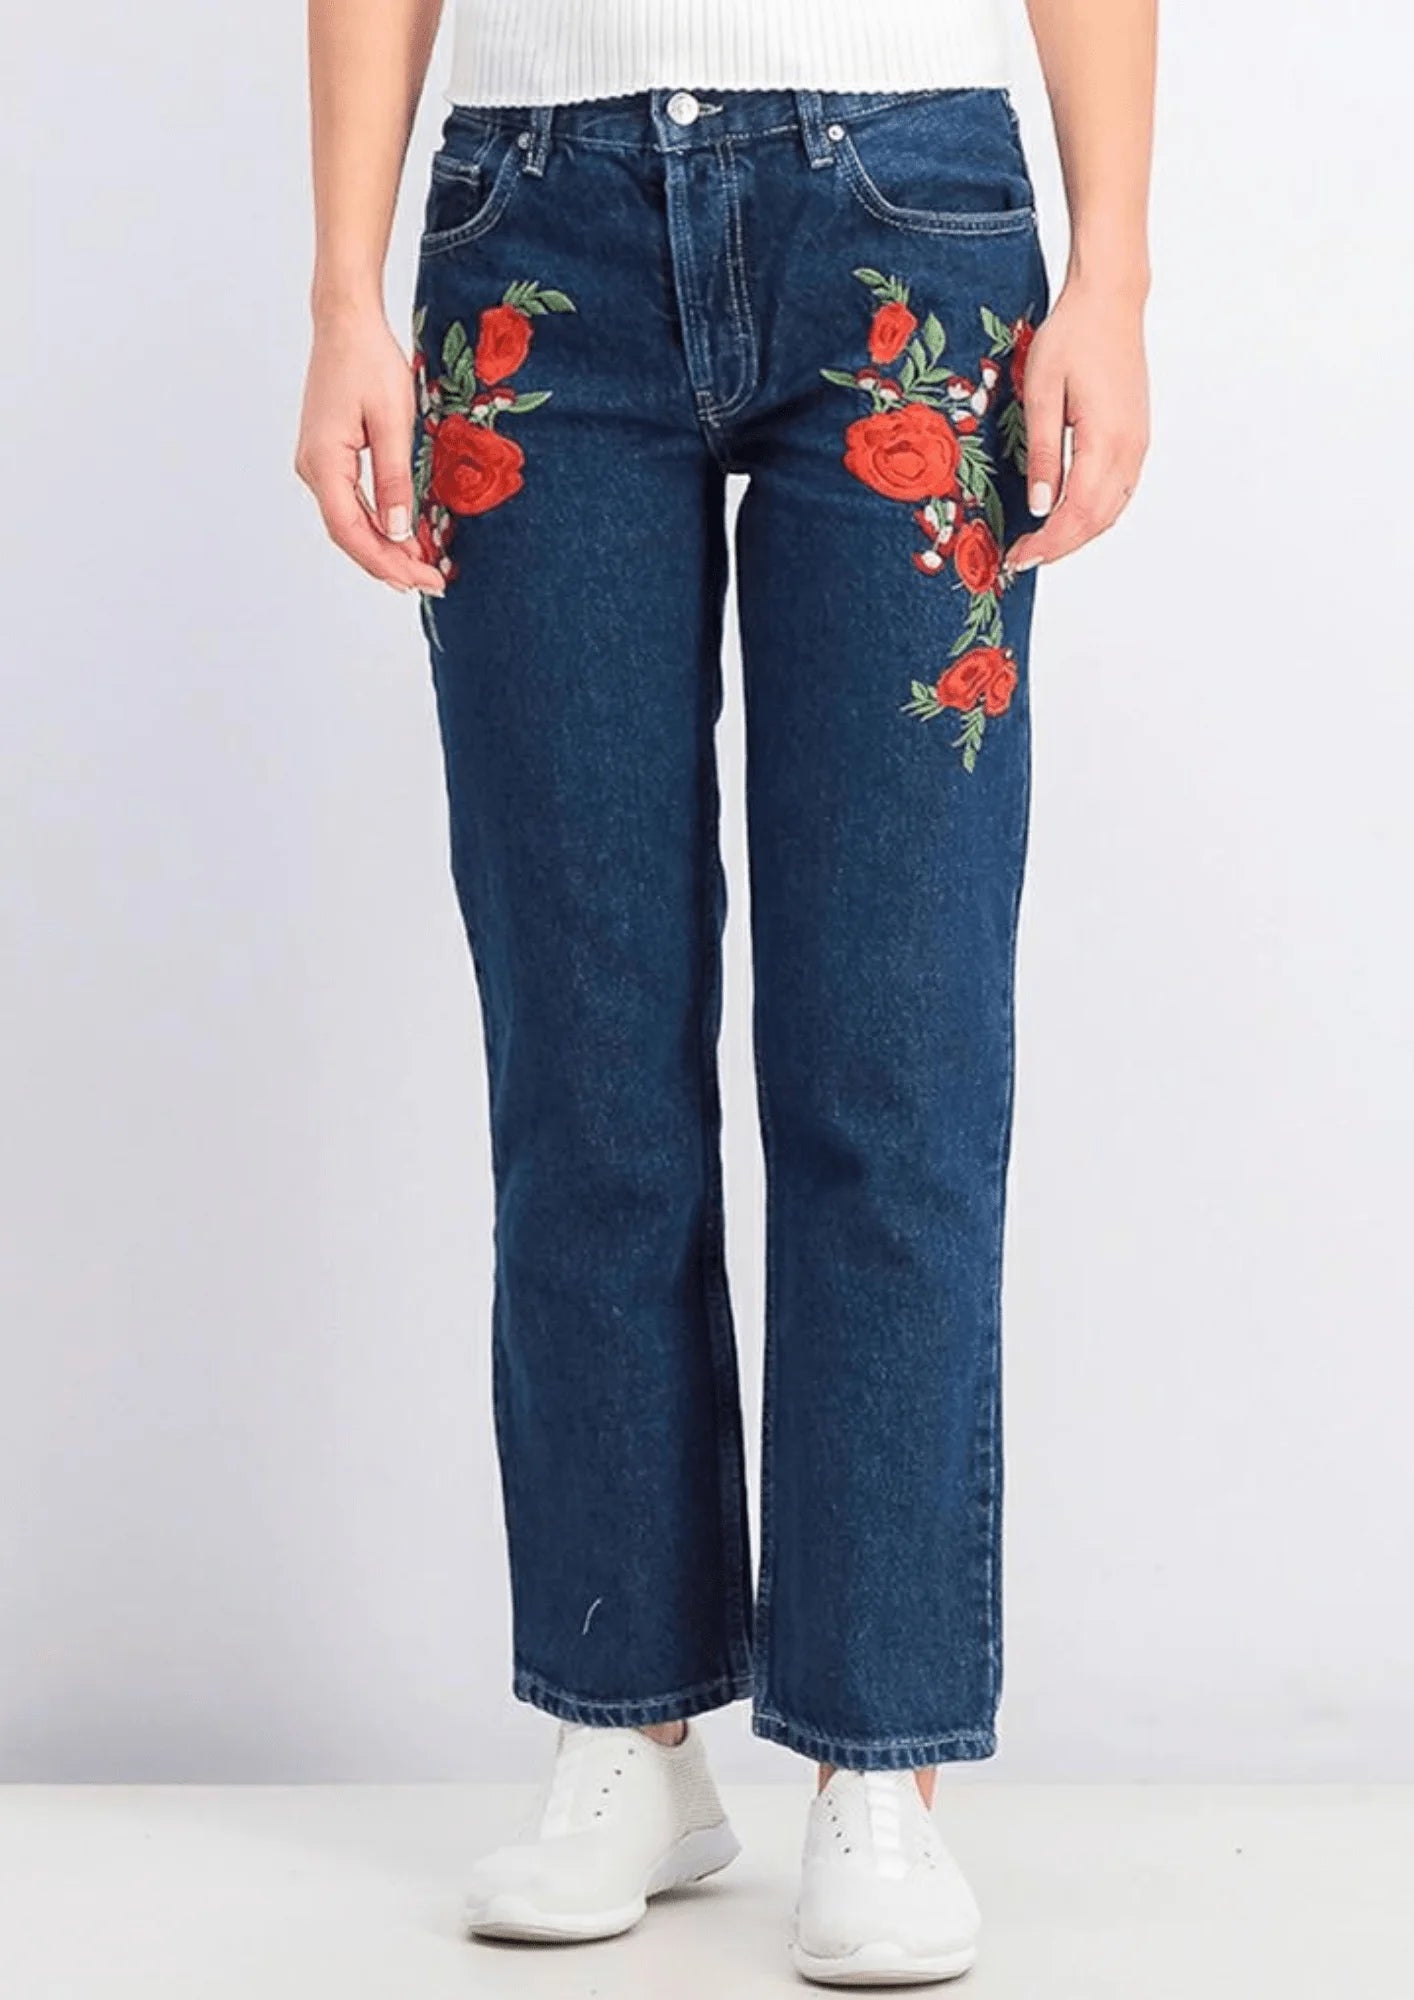 Pantalon en jean brodé floral